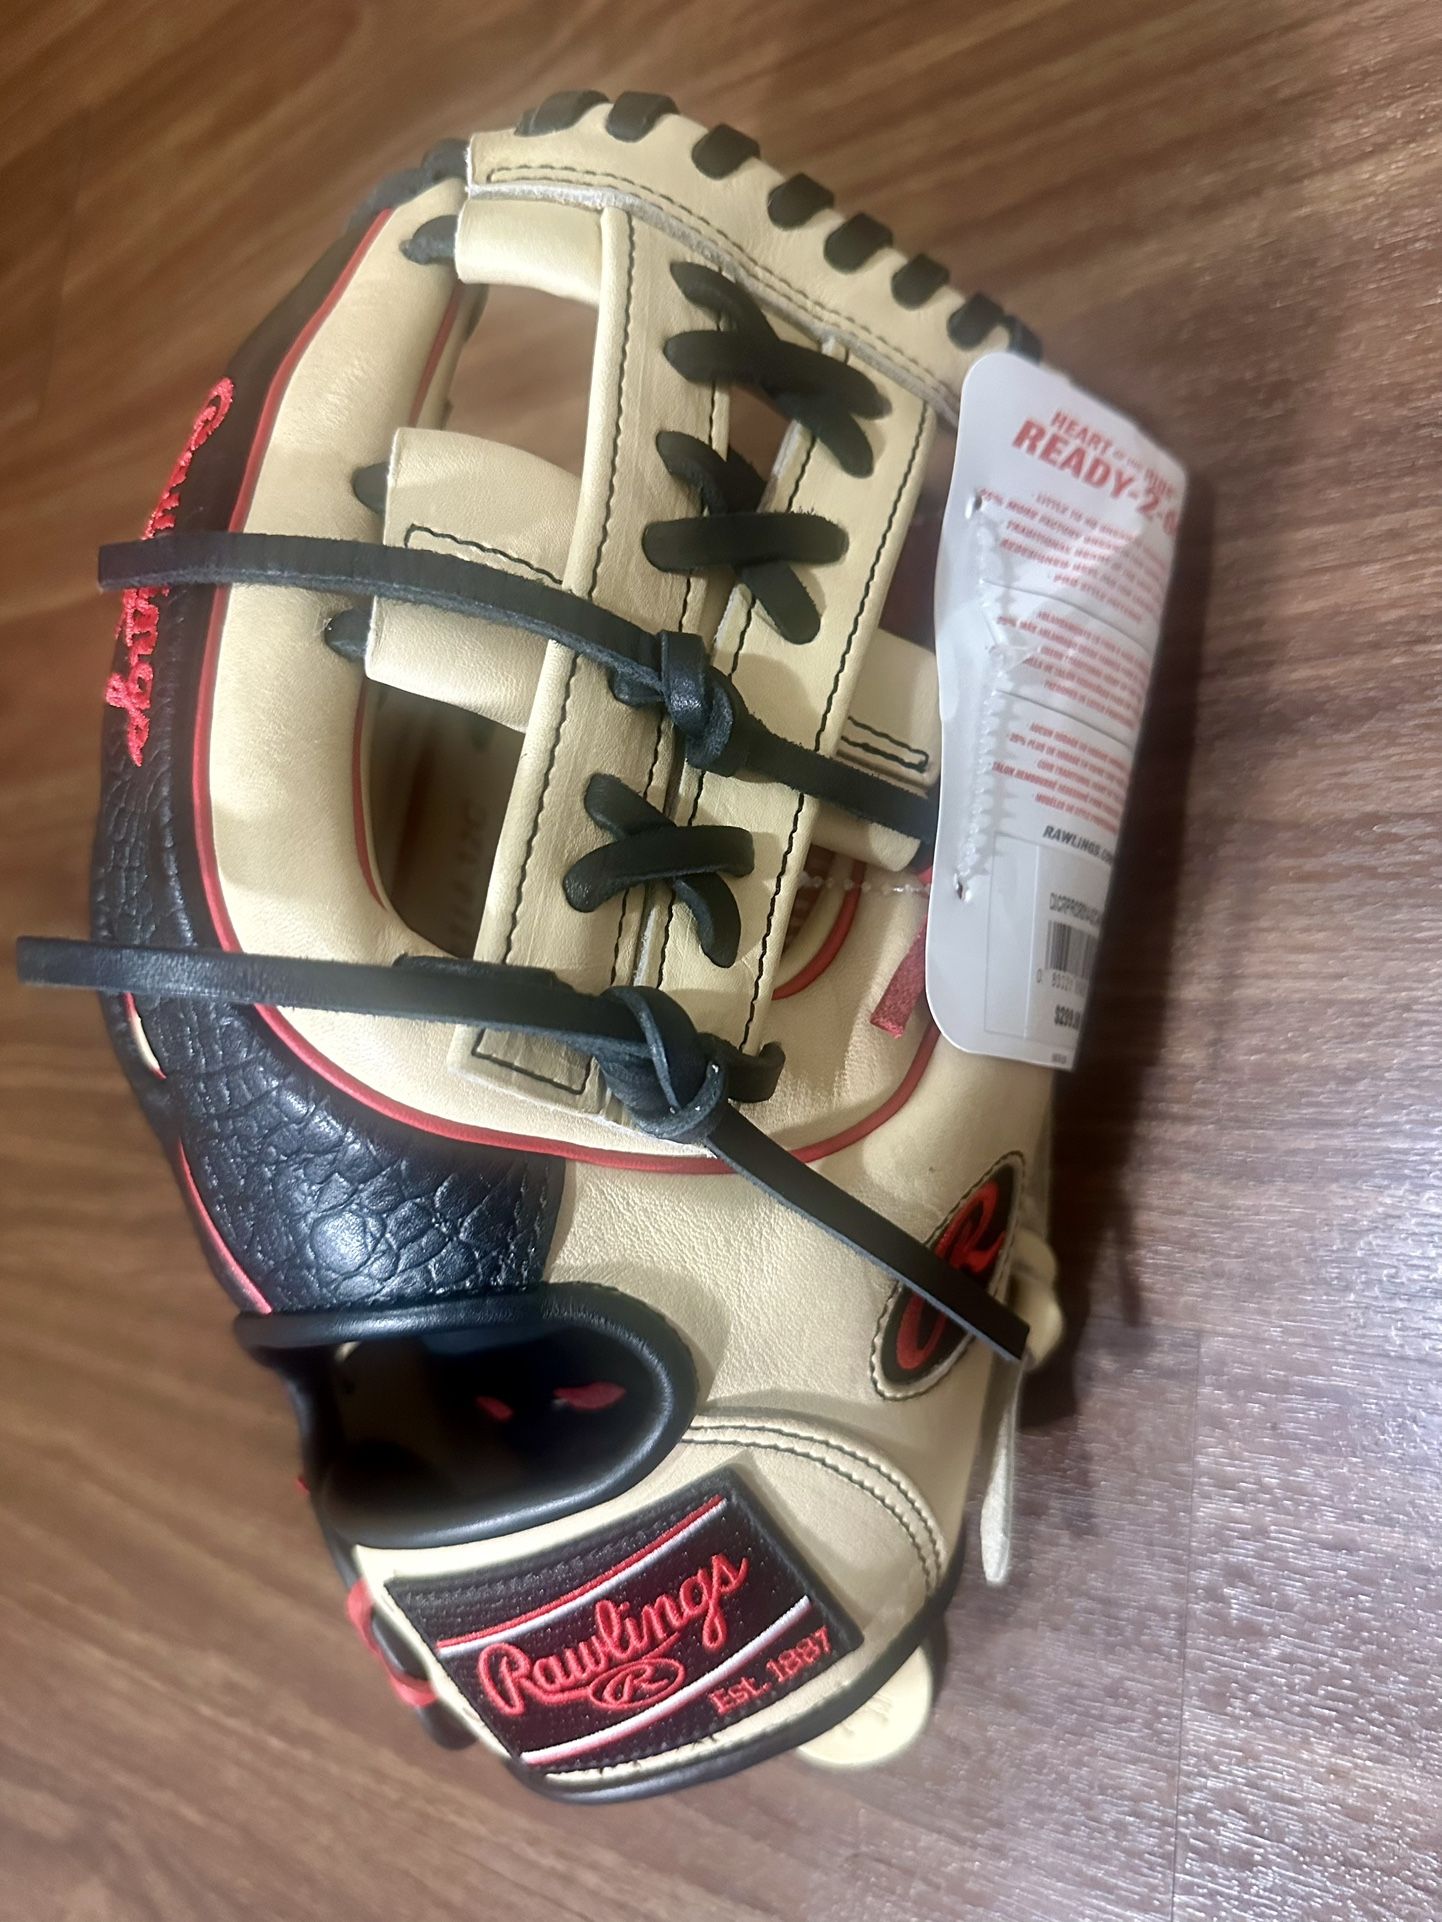 Brand New Baseball/Softball Glove